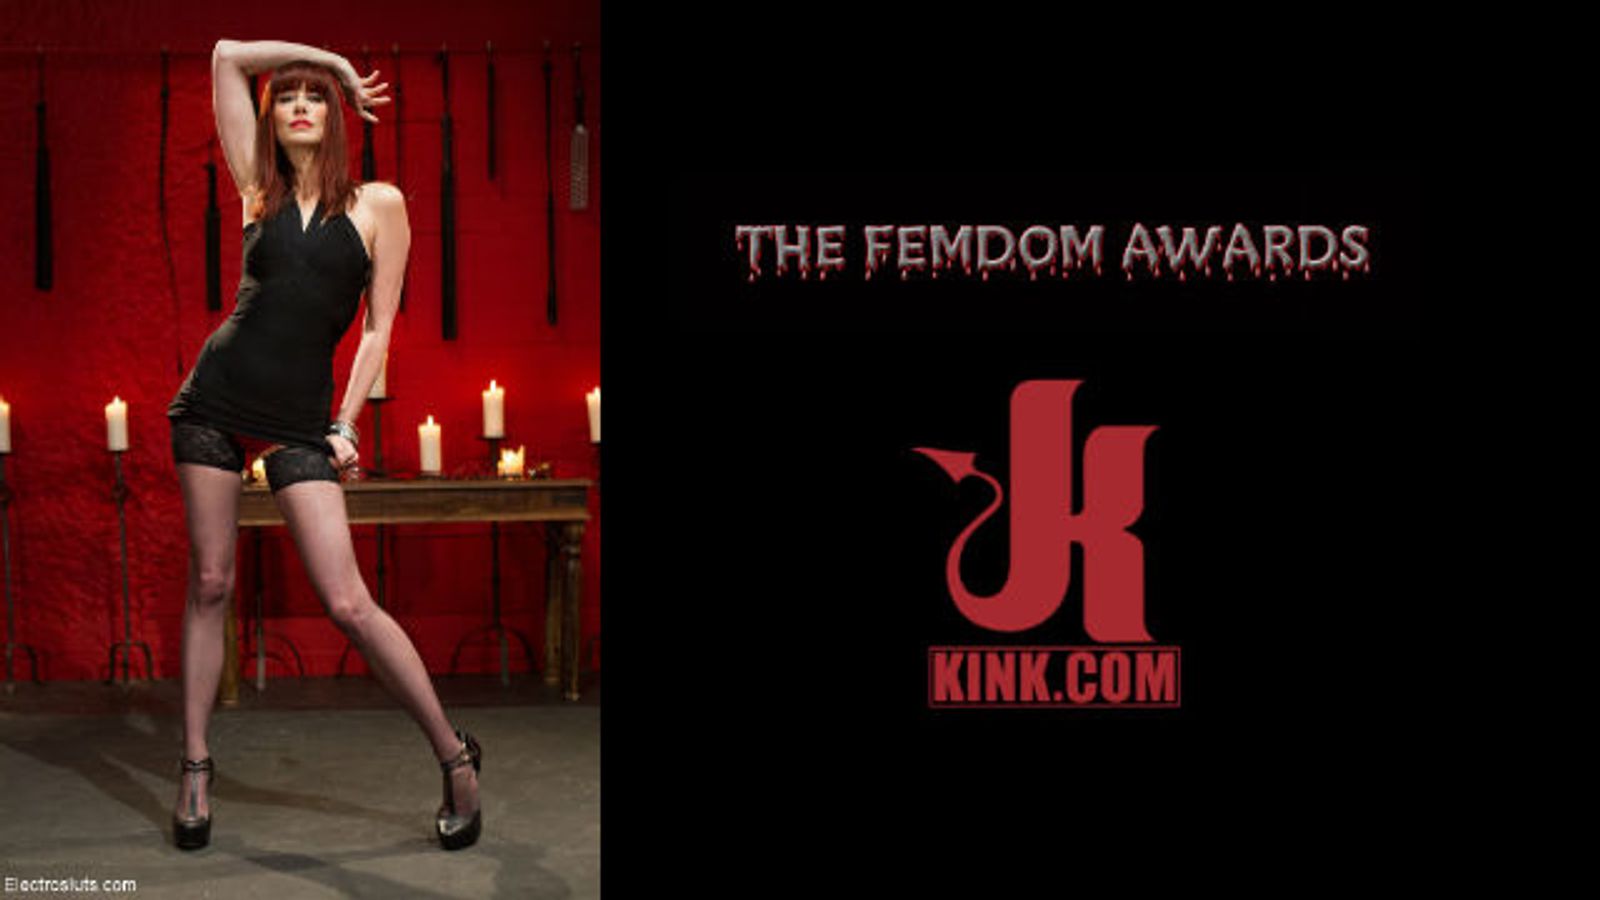 Kink’s Divine Bitches, Maitresse Madeline Lead in Femdom Award Noms